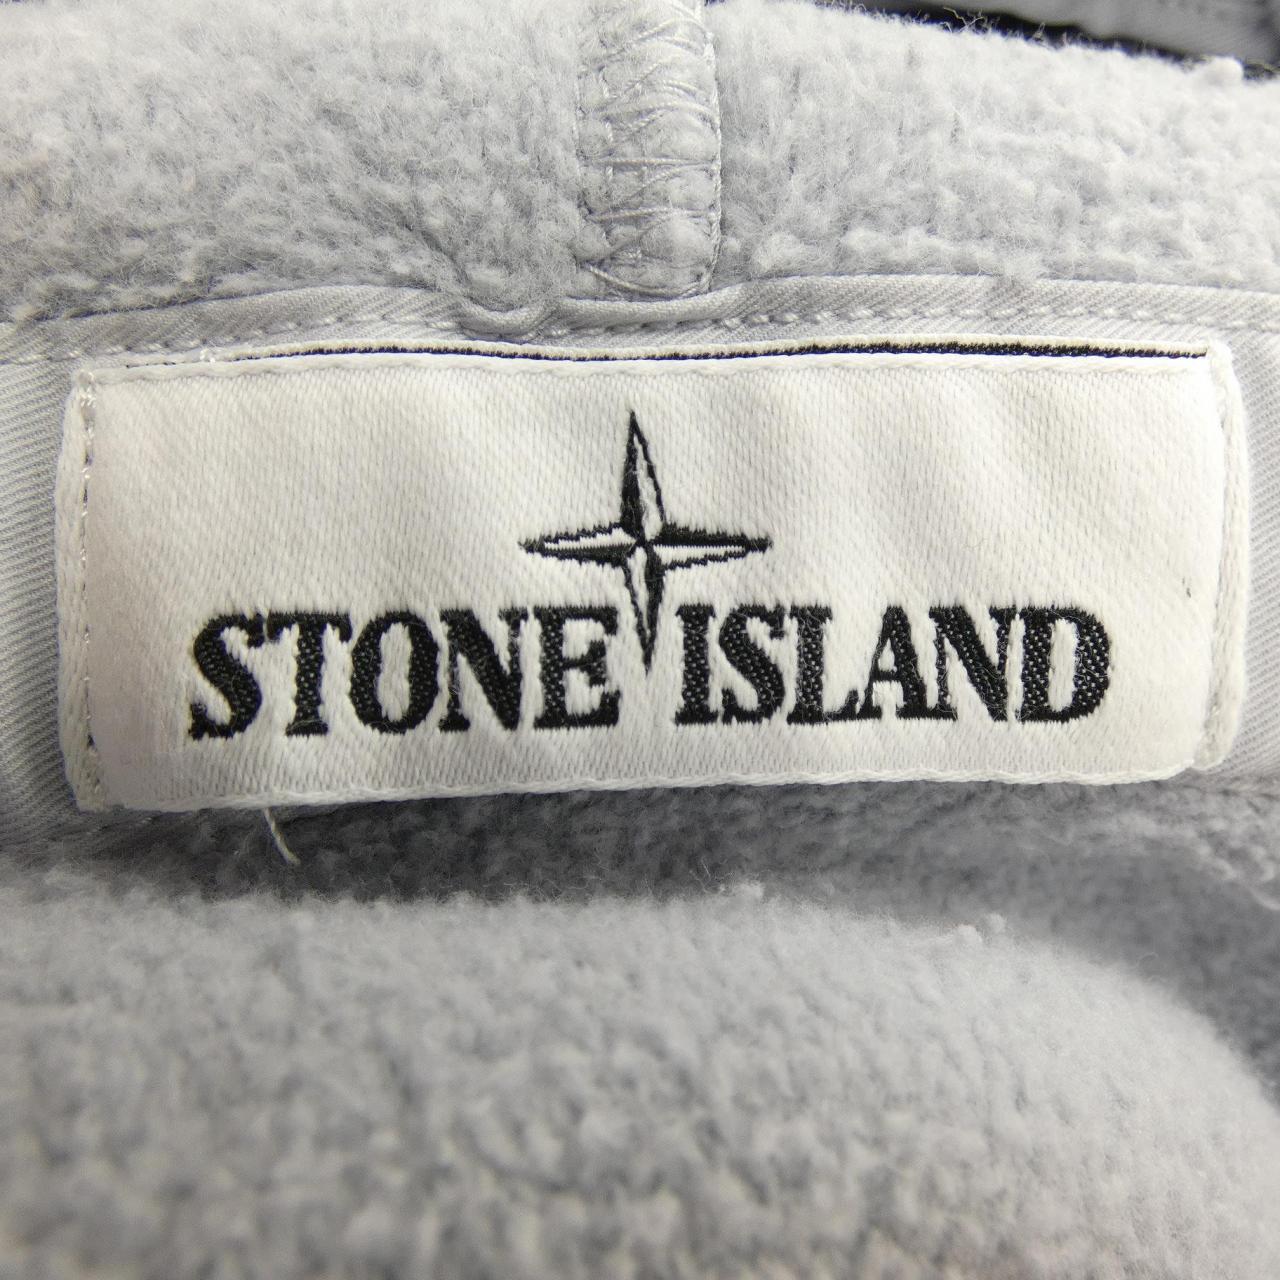 Stone land STONE ISLAND blouson